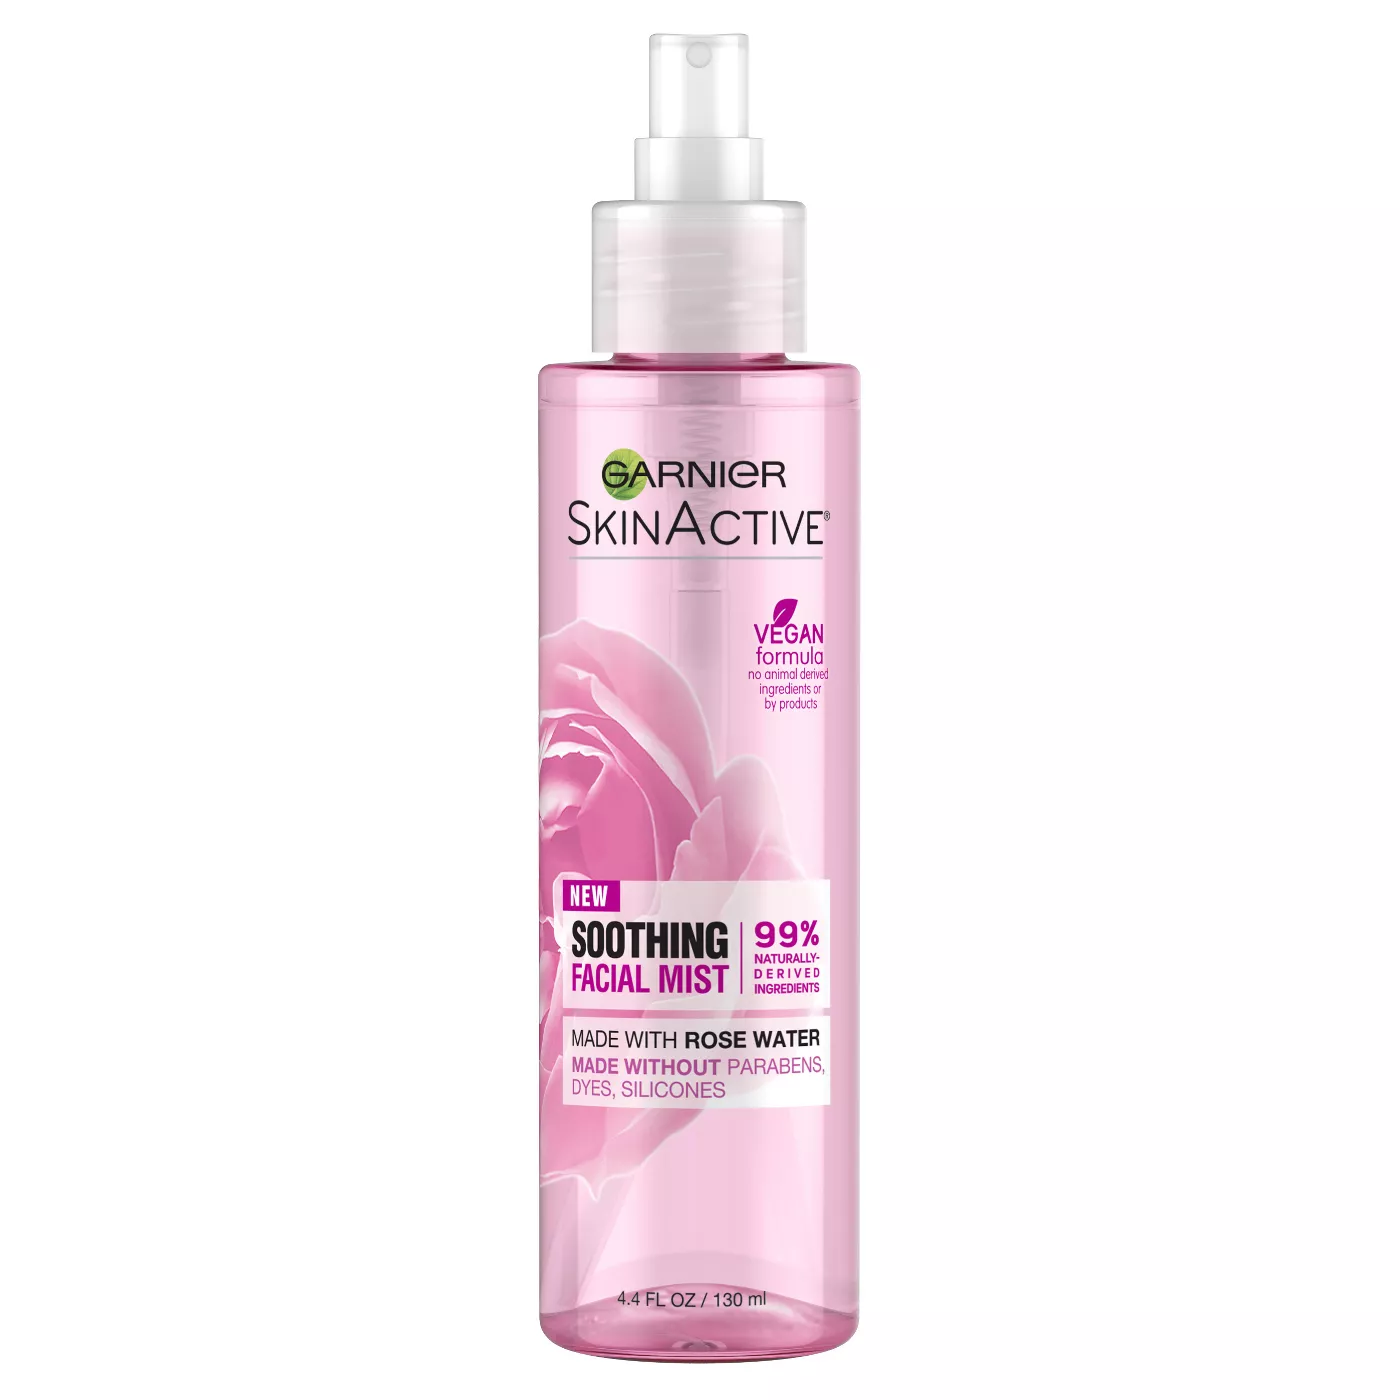 Garnier SkinActive Facial Mist Spray with Rose Water - 4.4 fl oz - image 1 of 7